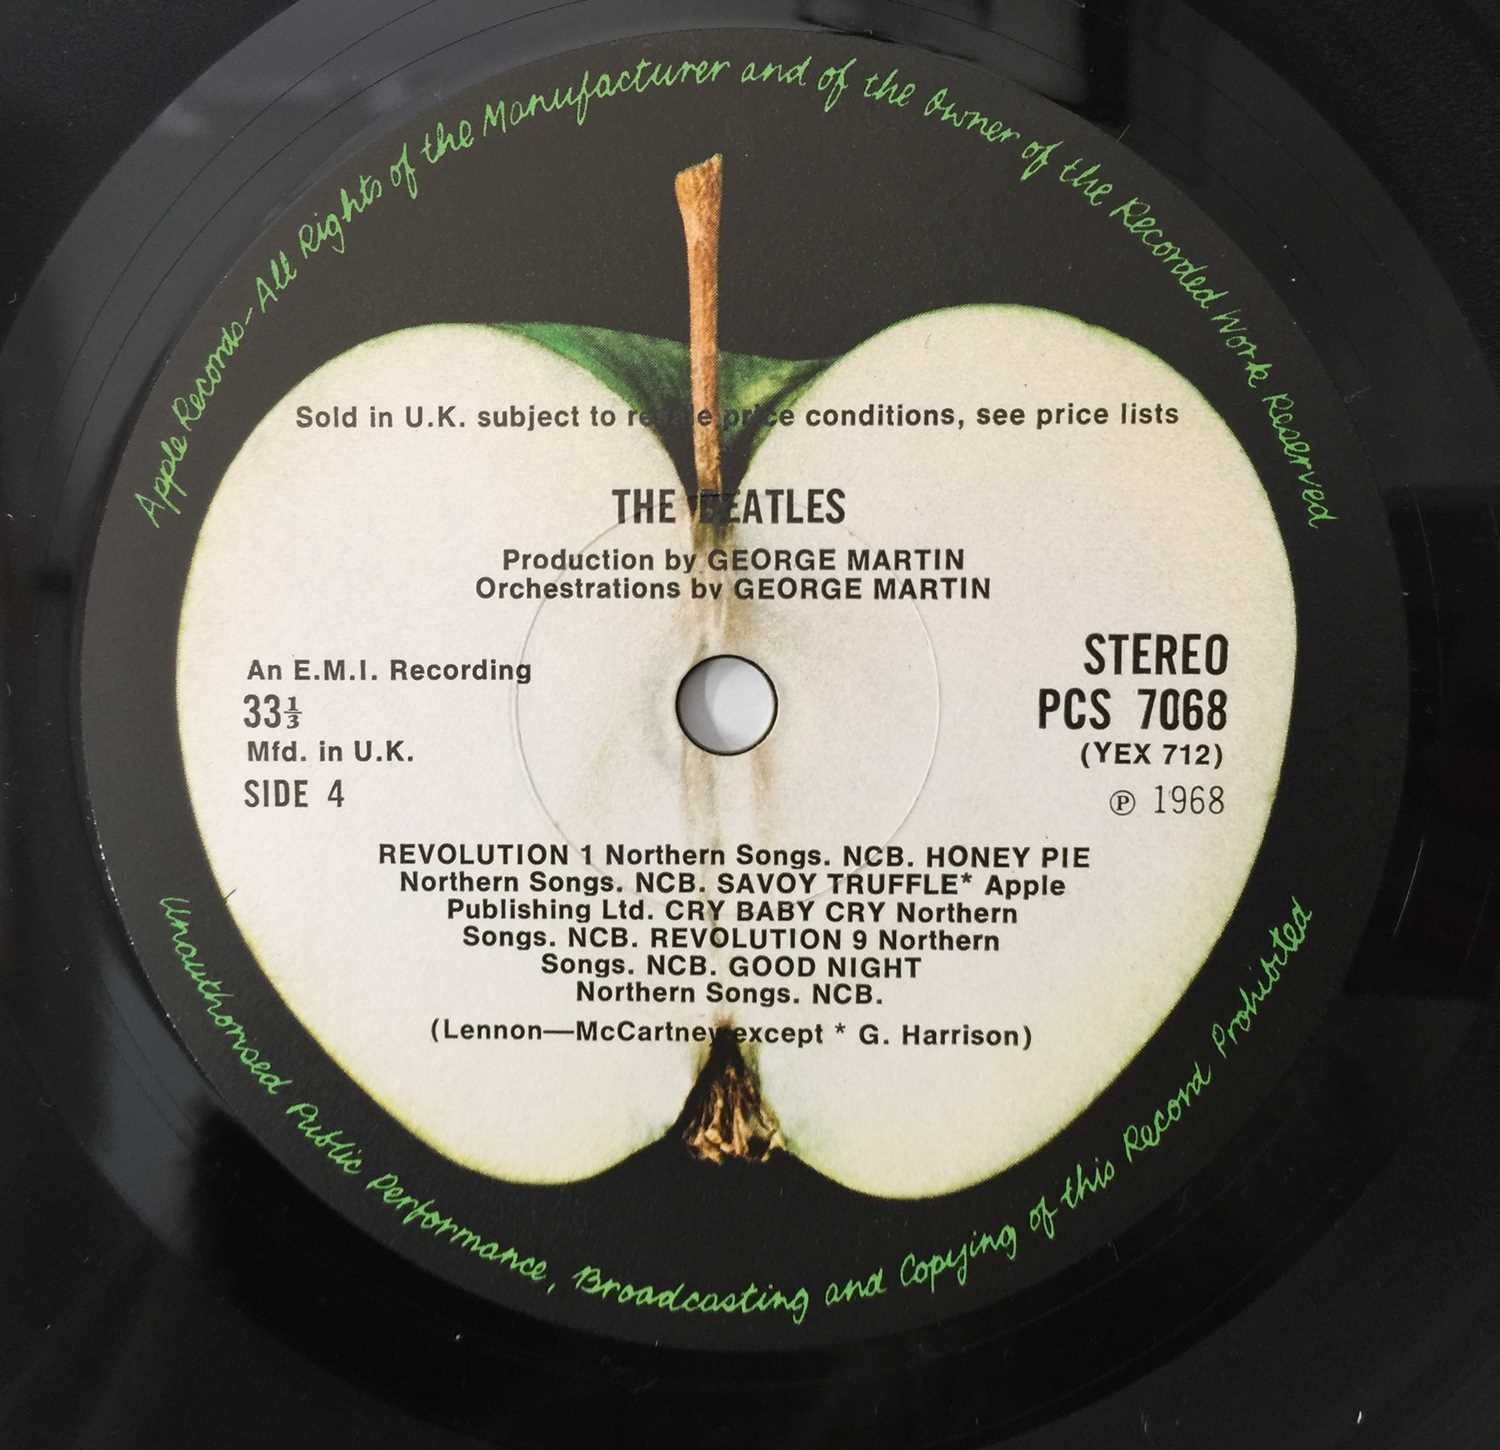 THE BEATLES - WHITE ALBUM LP (UK STEREO TOP LOADING COPY - PCS 7067/8) - Image 10 of 10